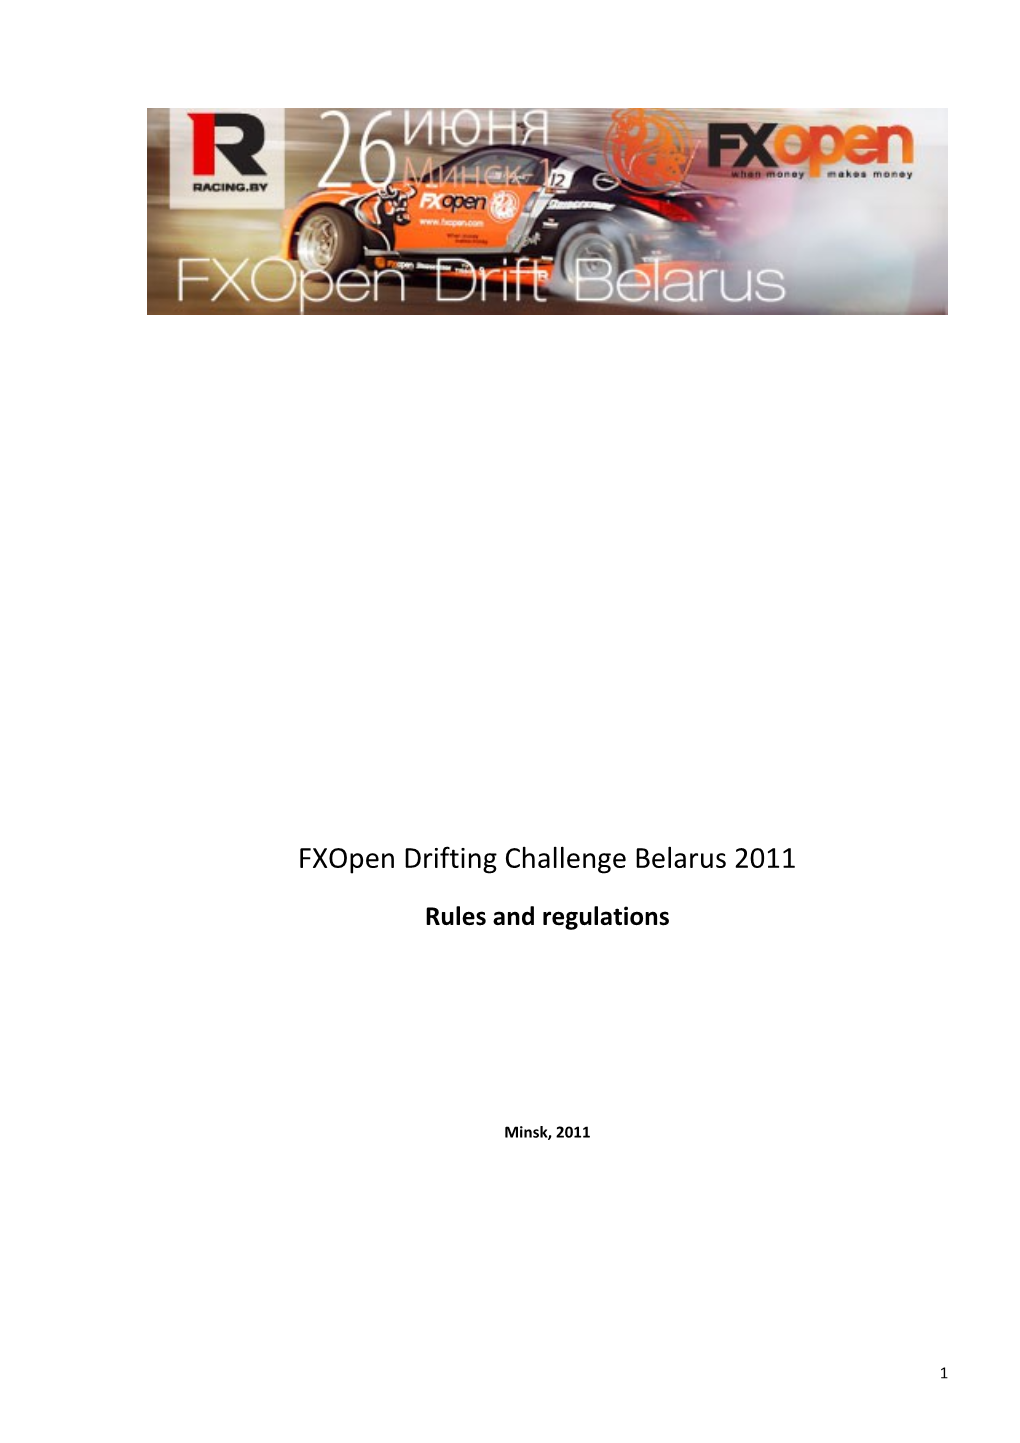 Fxopen Drifting Challenge Belarus 2011